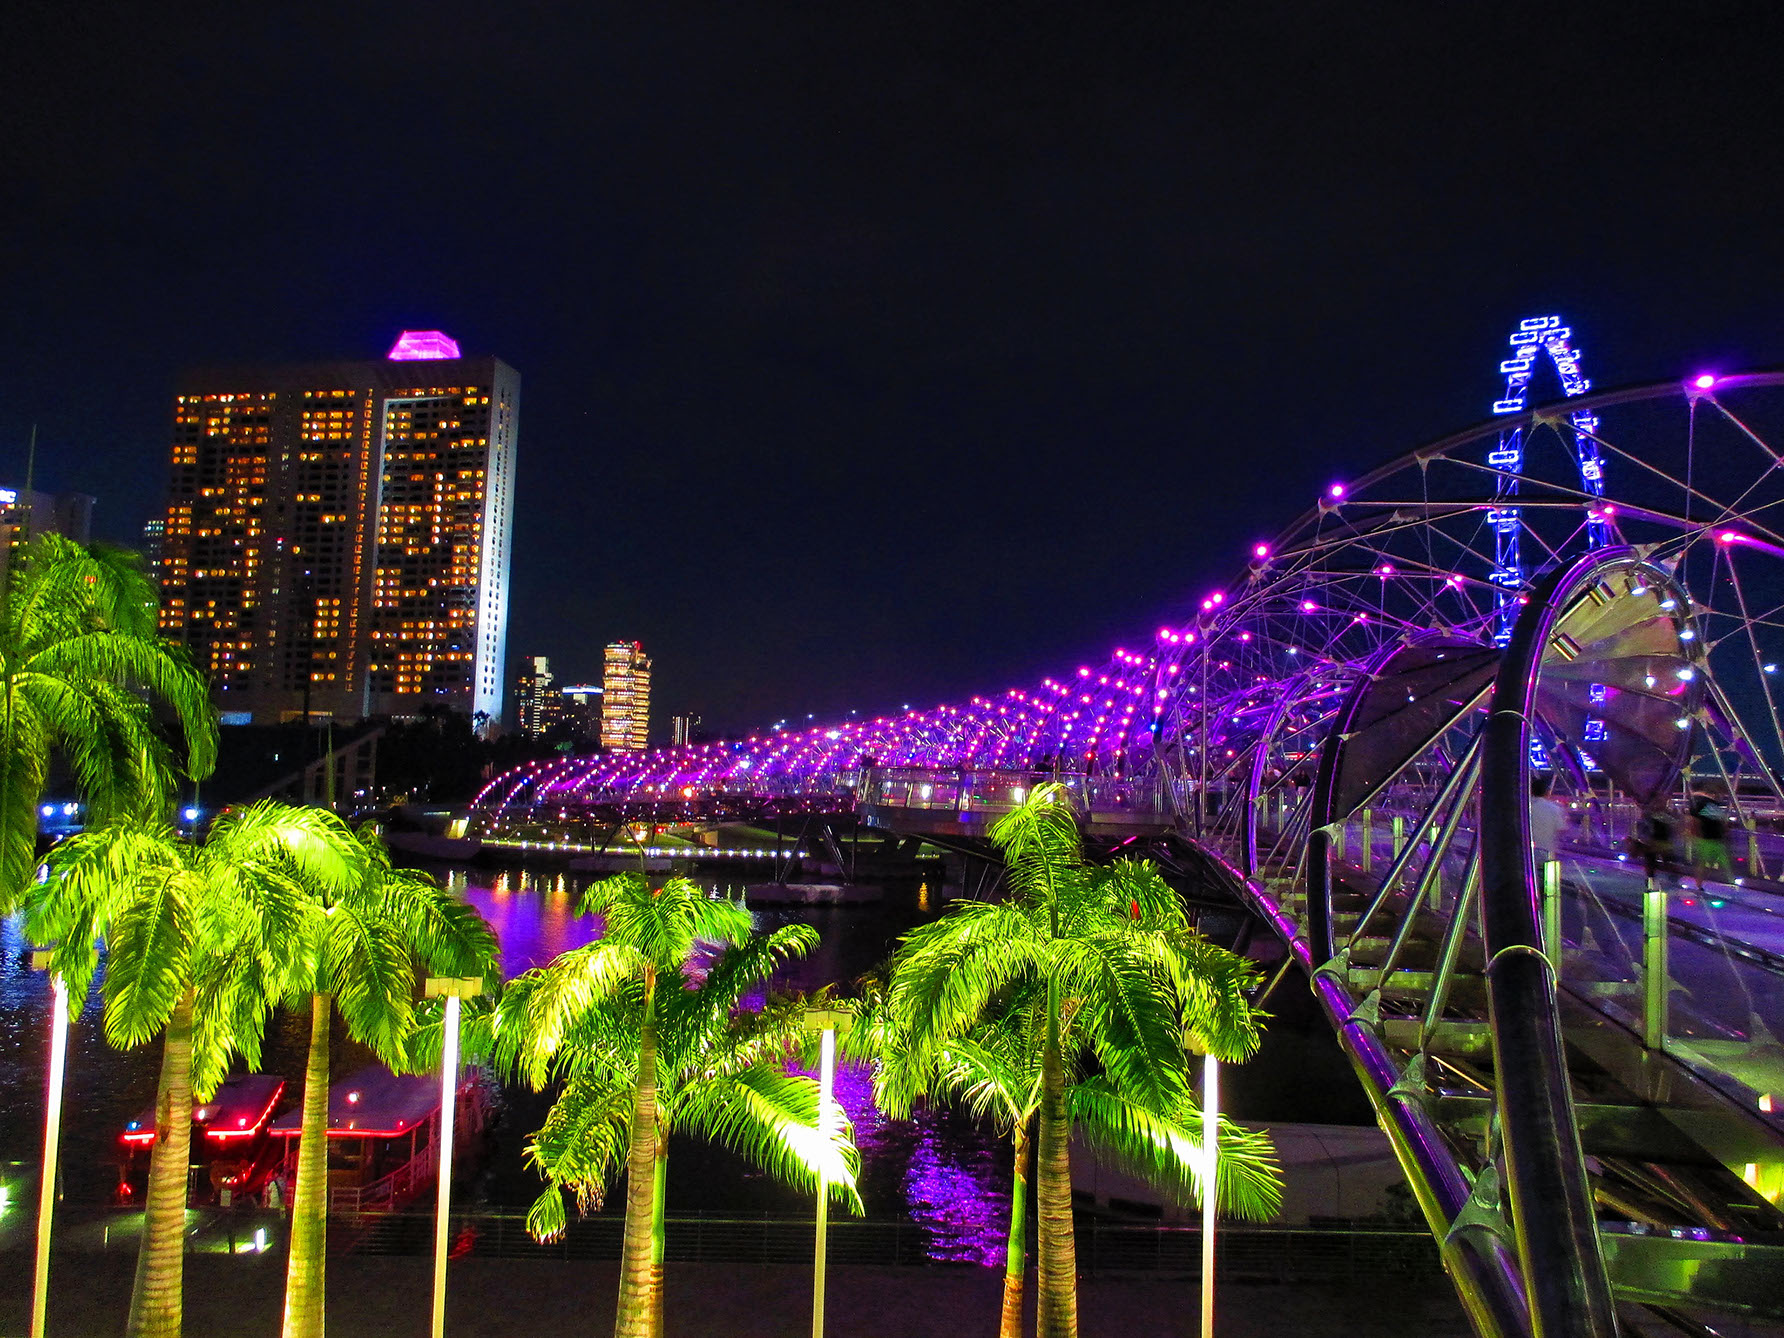 The Singapore Helix bridge is illuminated purple at night.